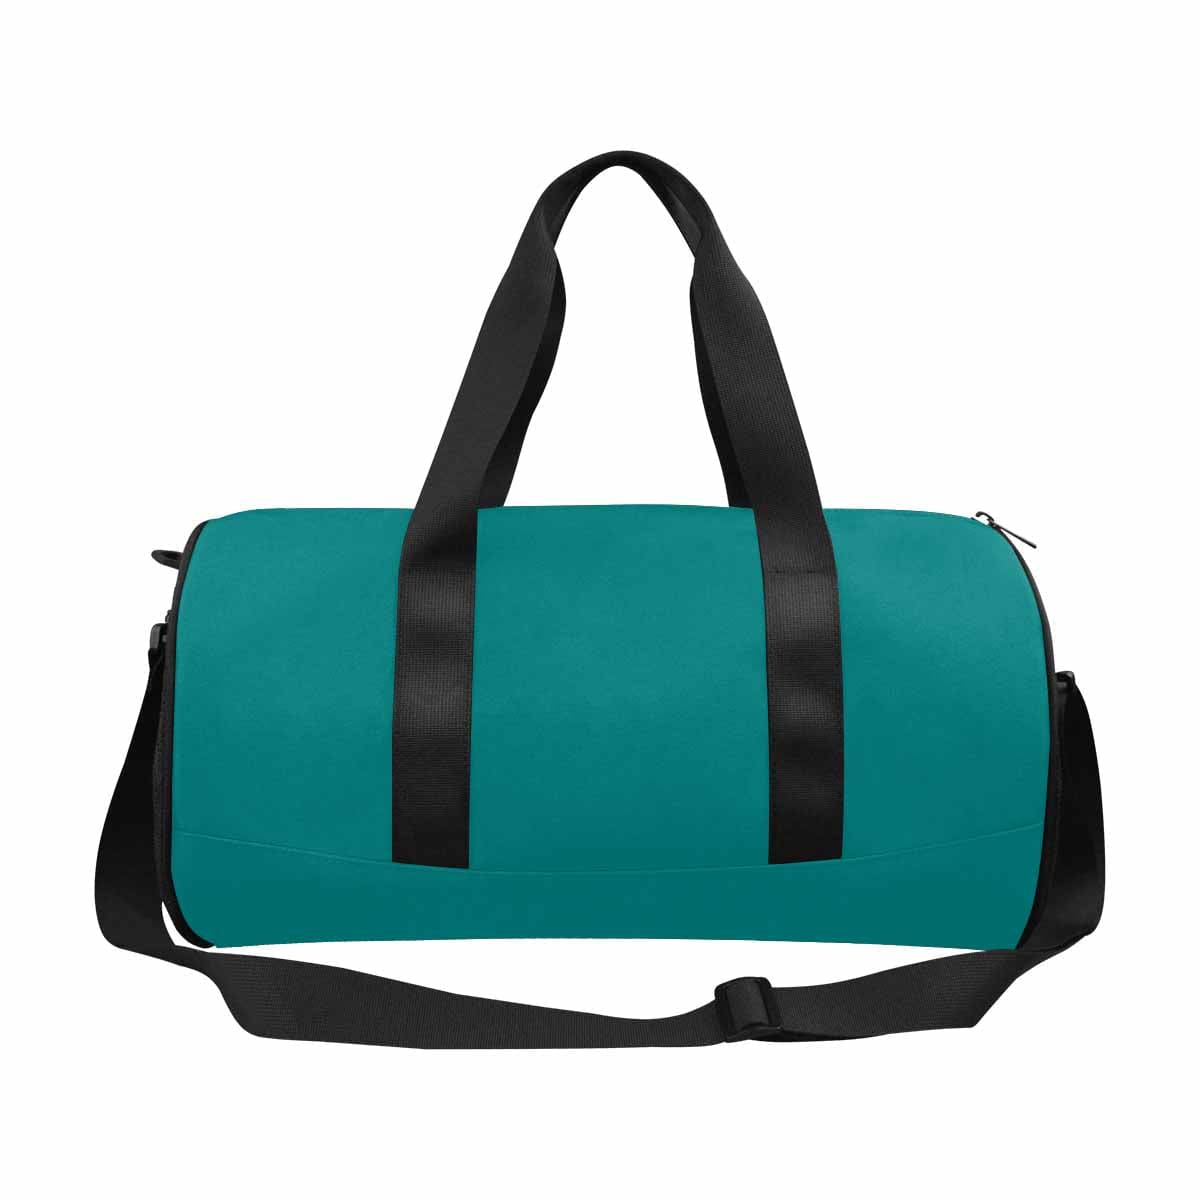 Duffel Bag Dark Teal Green Travel Carry On - Bags | Duffel Bags